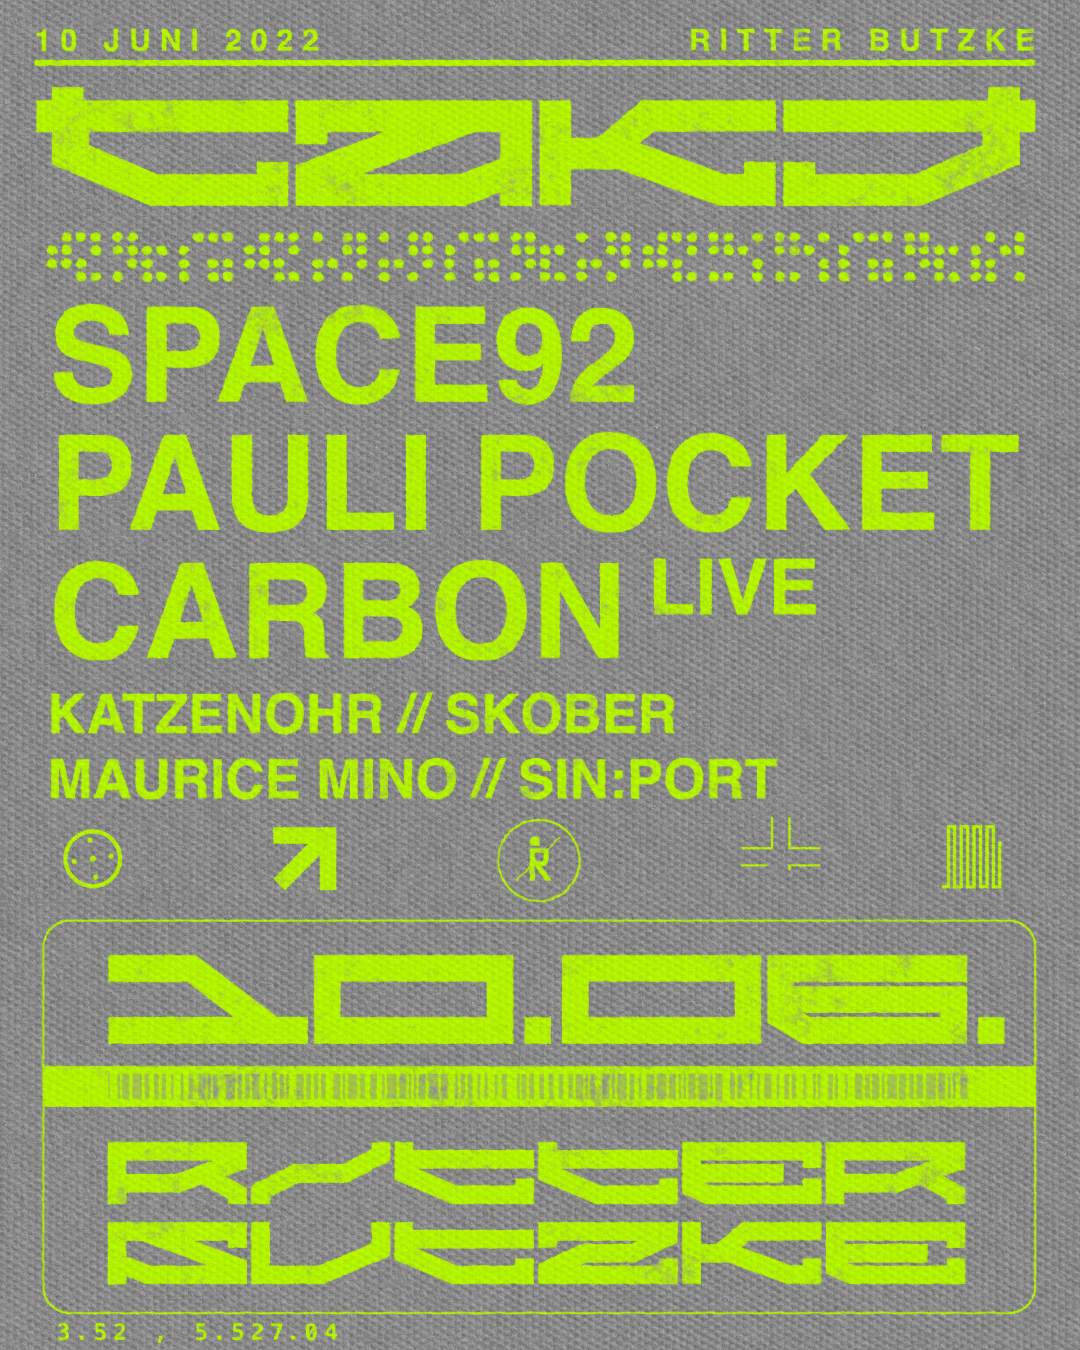 TAKT (Open Air & Indoor)/w Space92, Pauli Pocket, Skober, Carbon uvm. - Página frontal